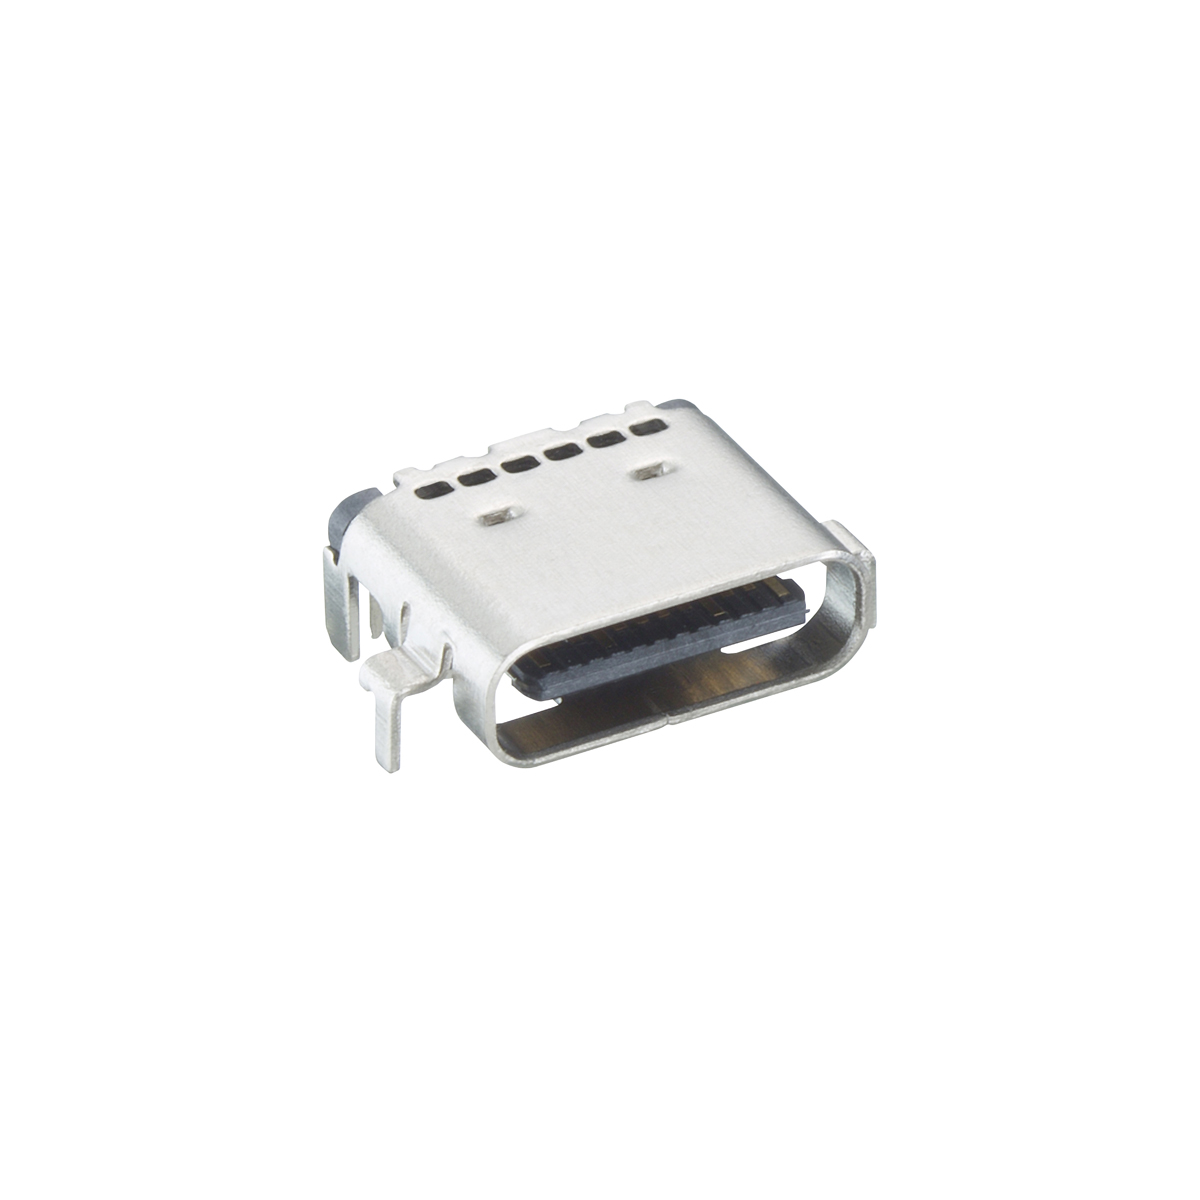 Lumberg: 2436 04 (Series 24 | USB and IEEE 1394 connectors)